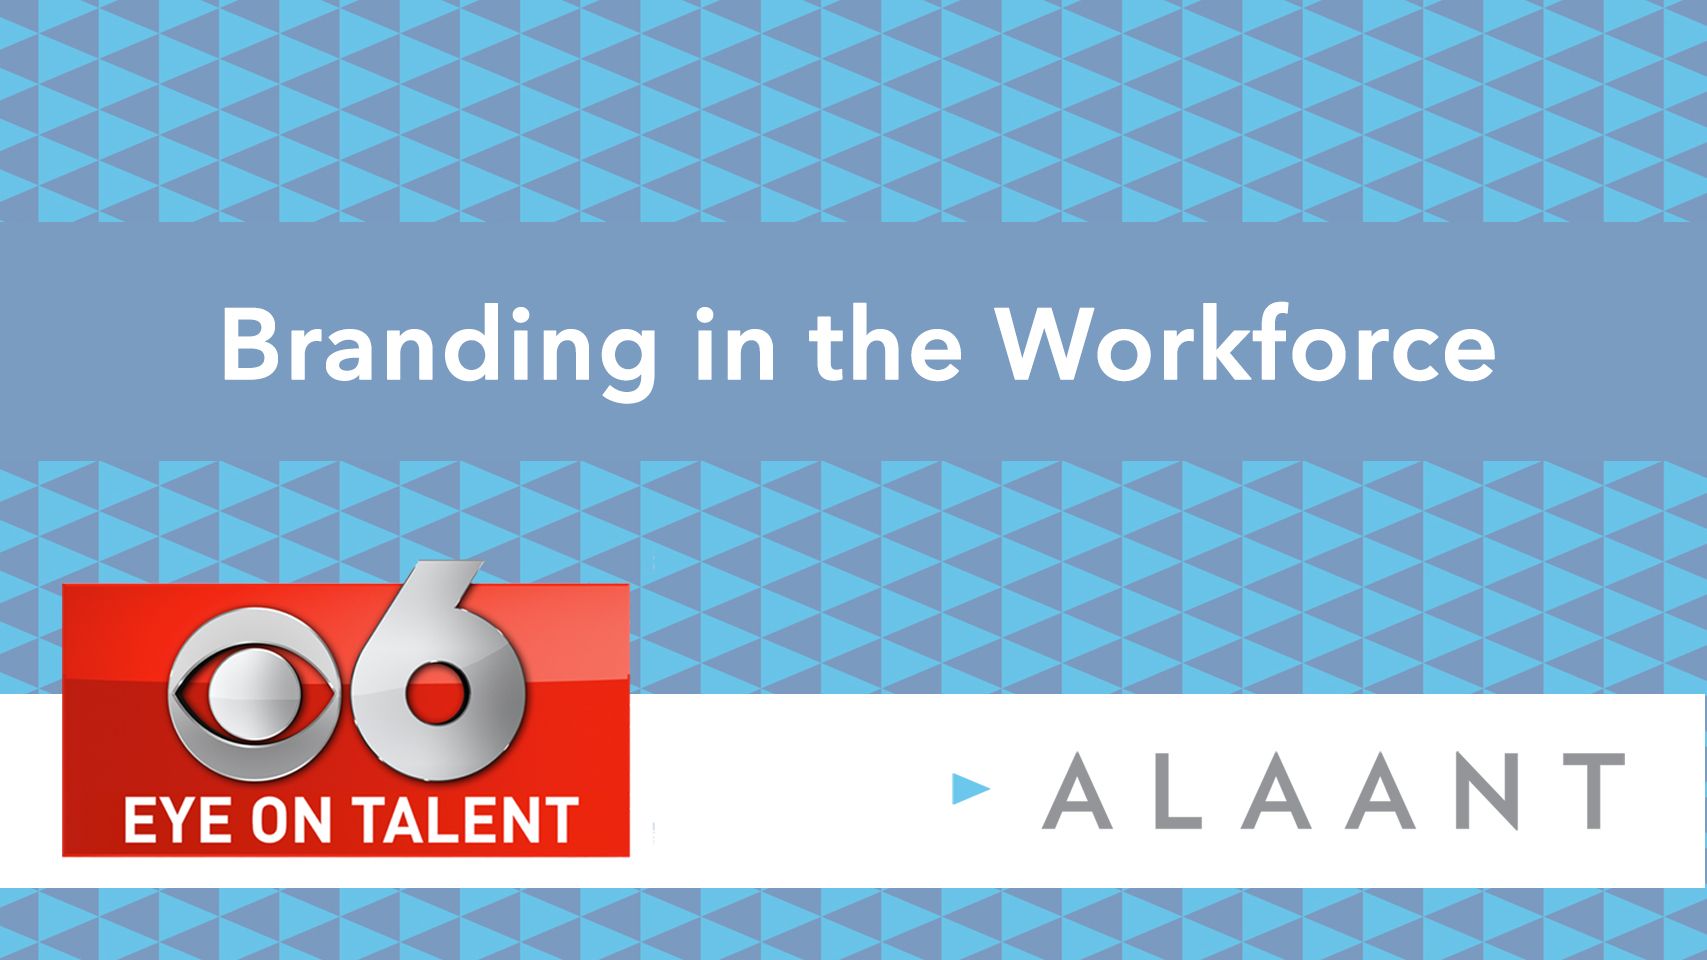 Alaant Eye on Talent: Branding in the Workforce